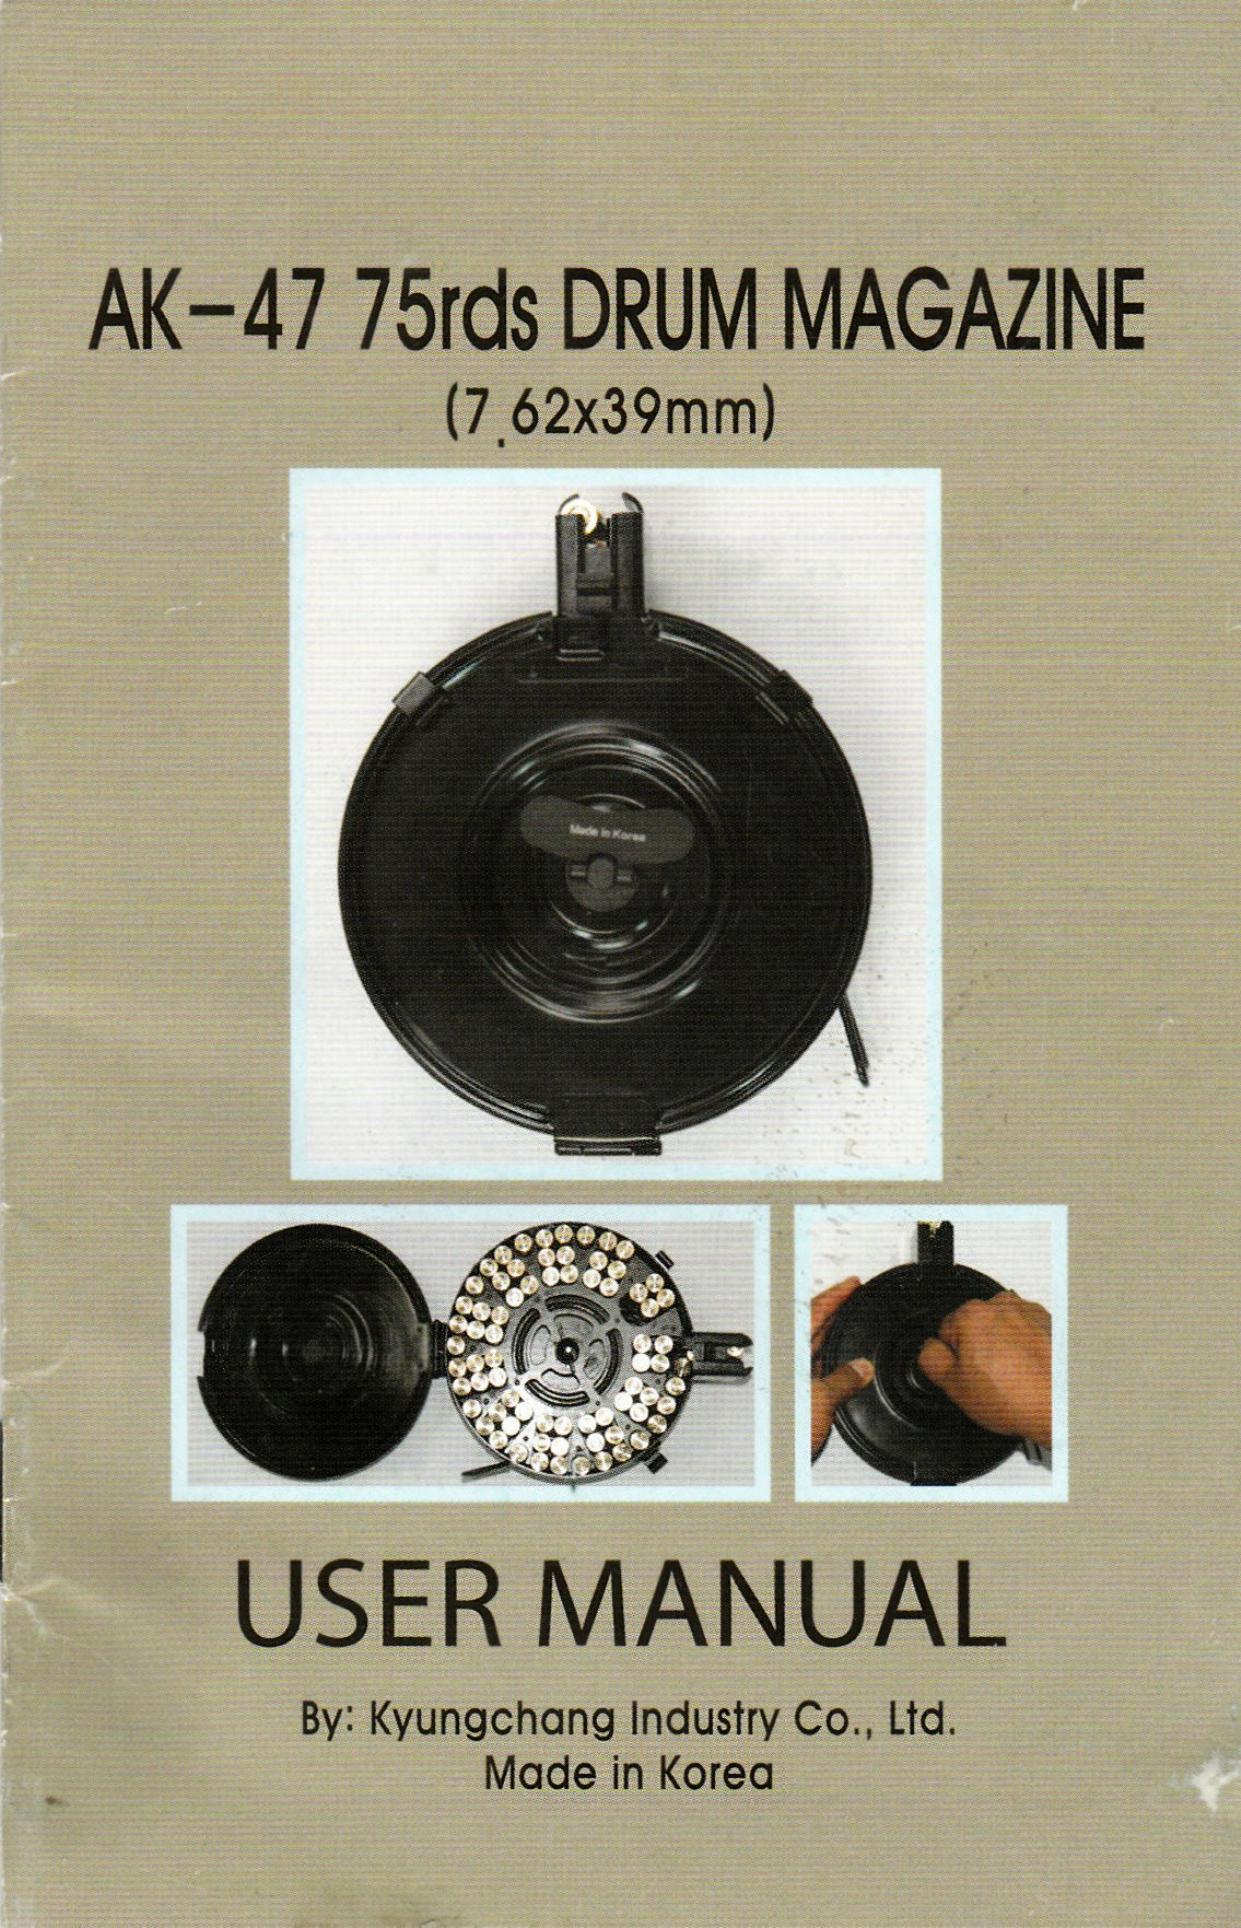 KCI AK-47 75rd Drum Magazine Manual - 7.62x39mm by KCI